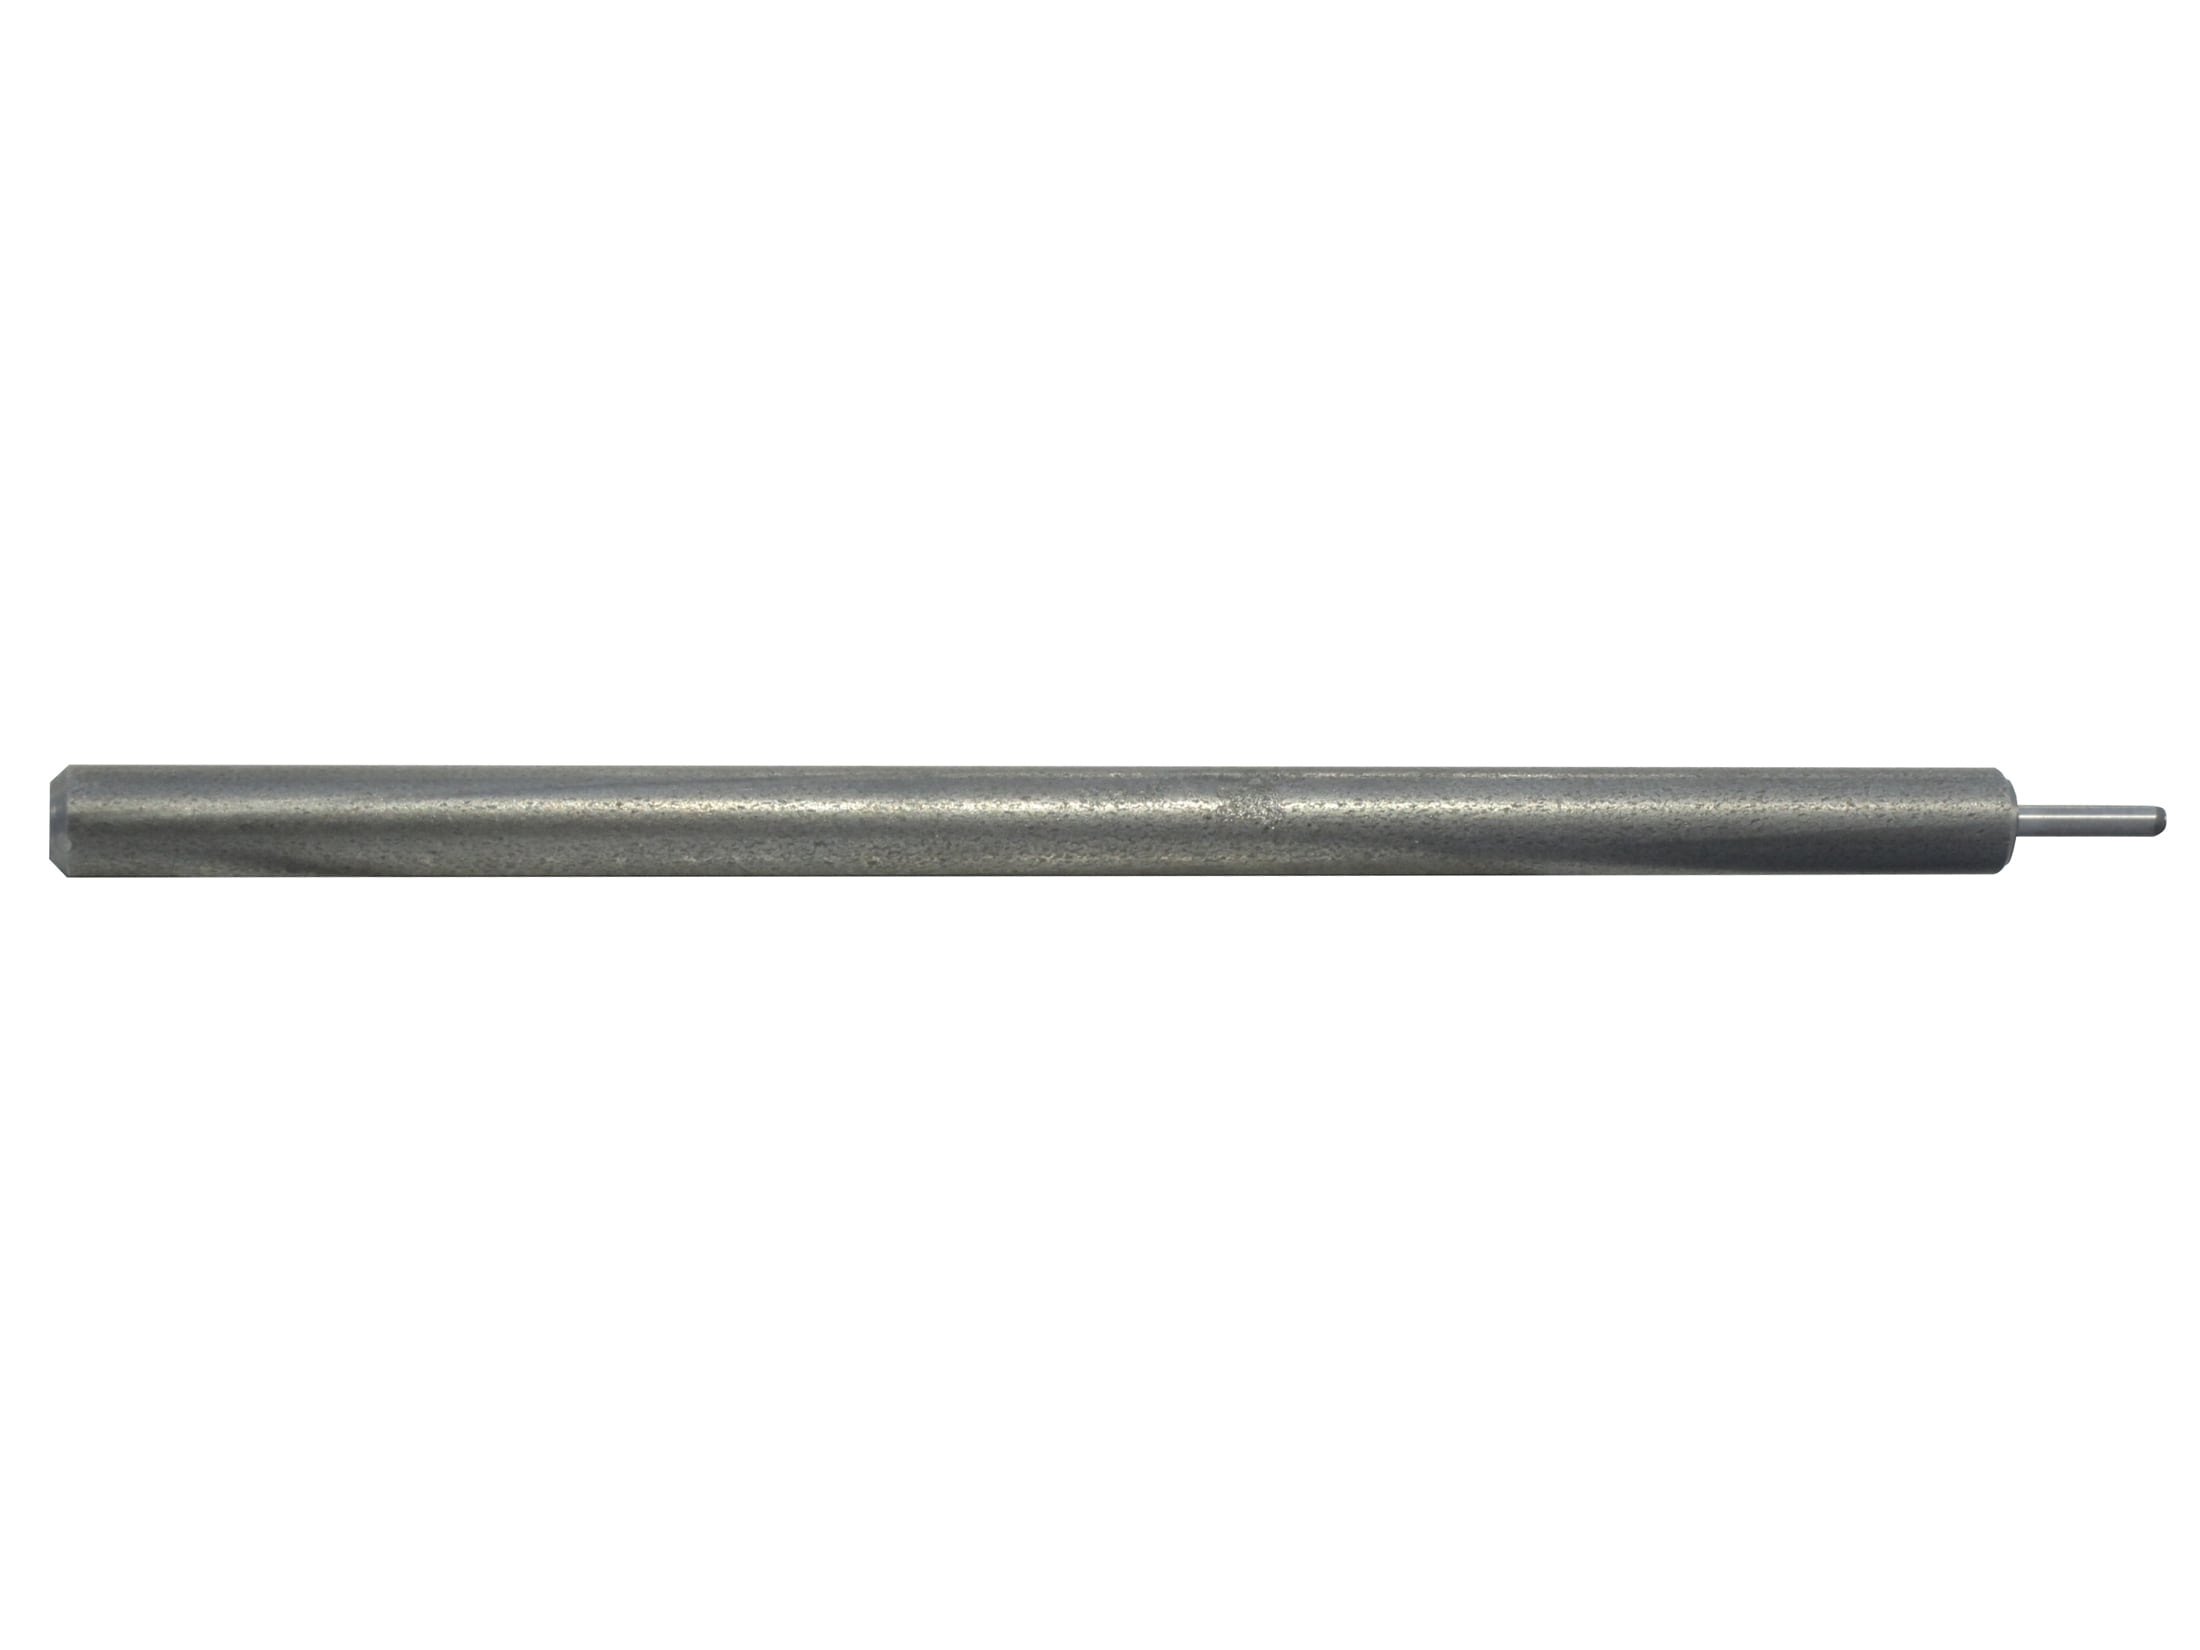 Lee Polished Steel Handgun Reloading Dies Decapping Rod 90027 